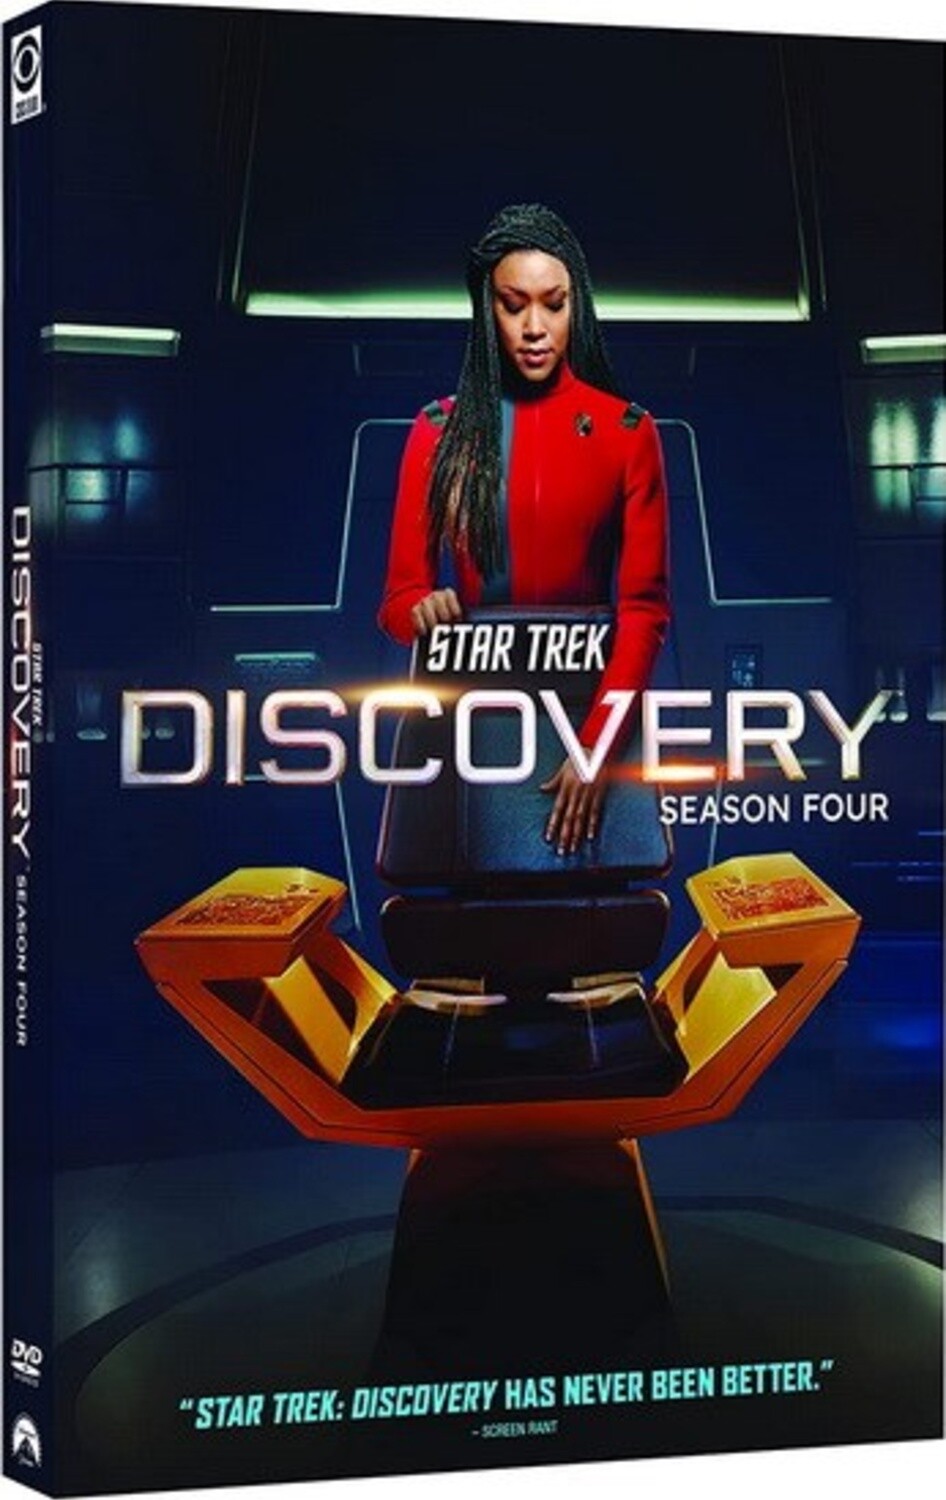 Star Trek Discovery Season Four (7 day DVD rental)